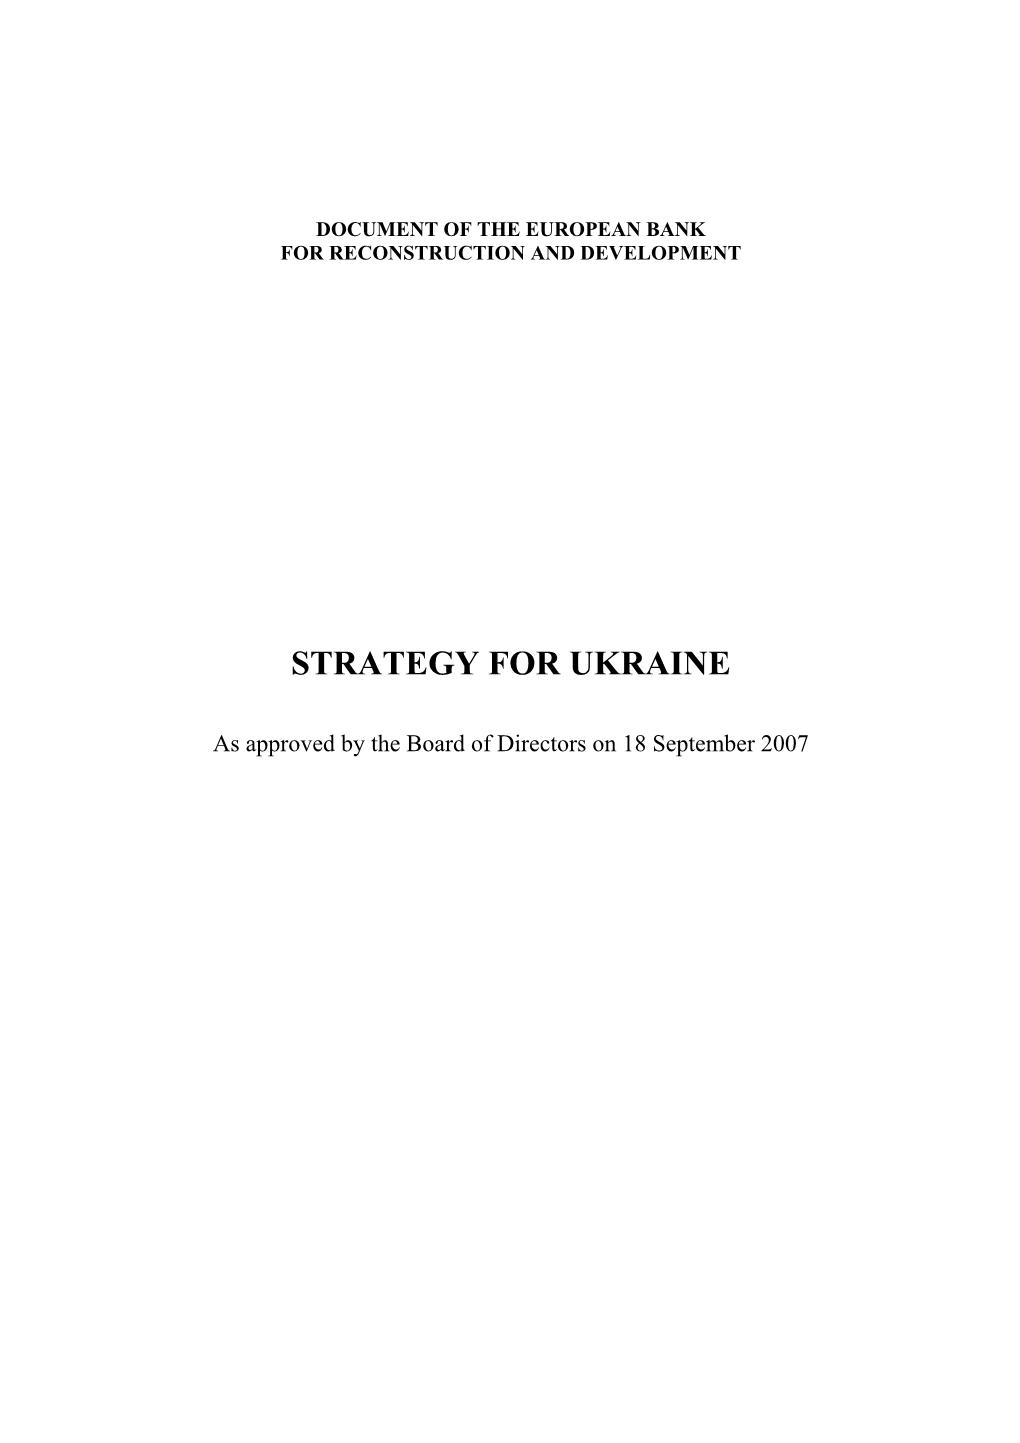 Ukraine Country Strategy [EBRD